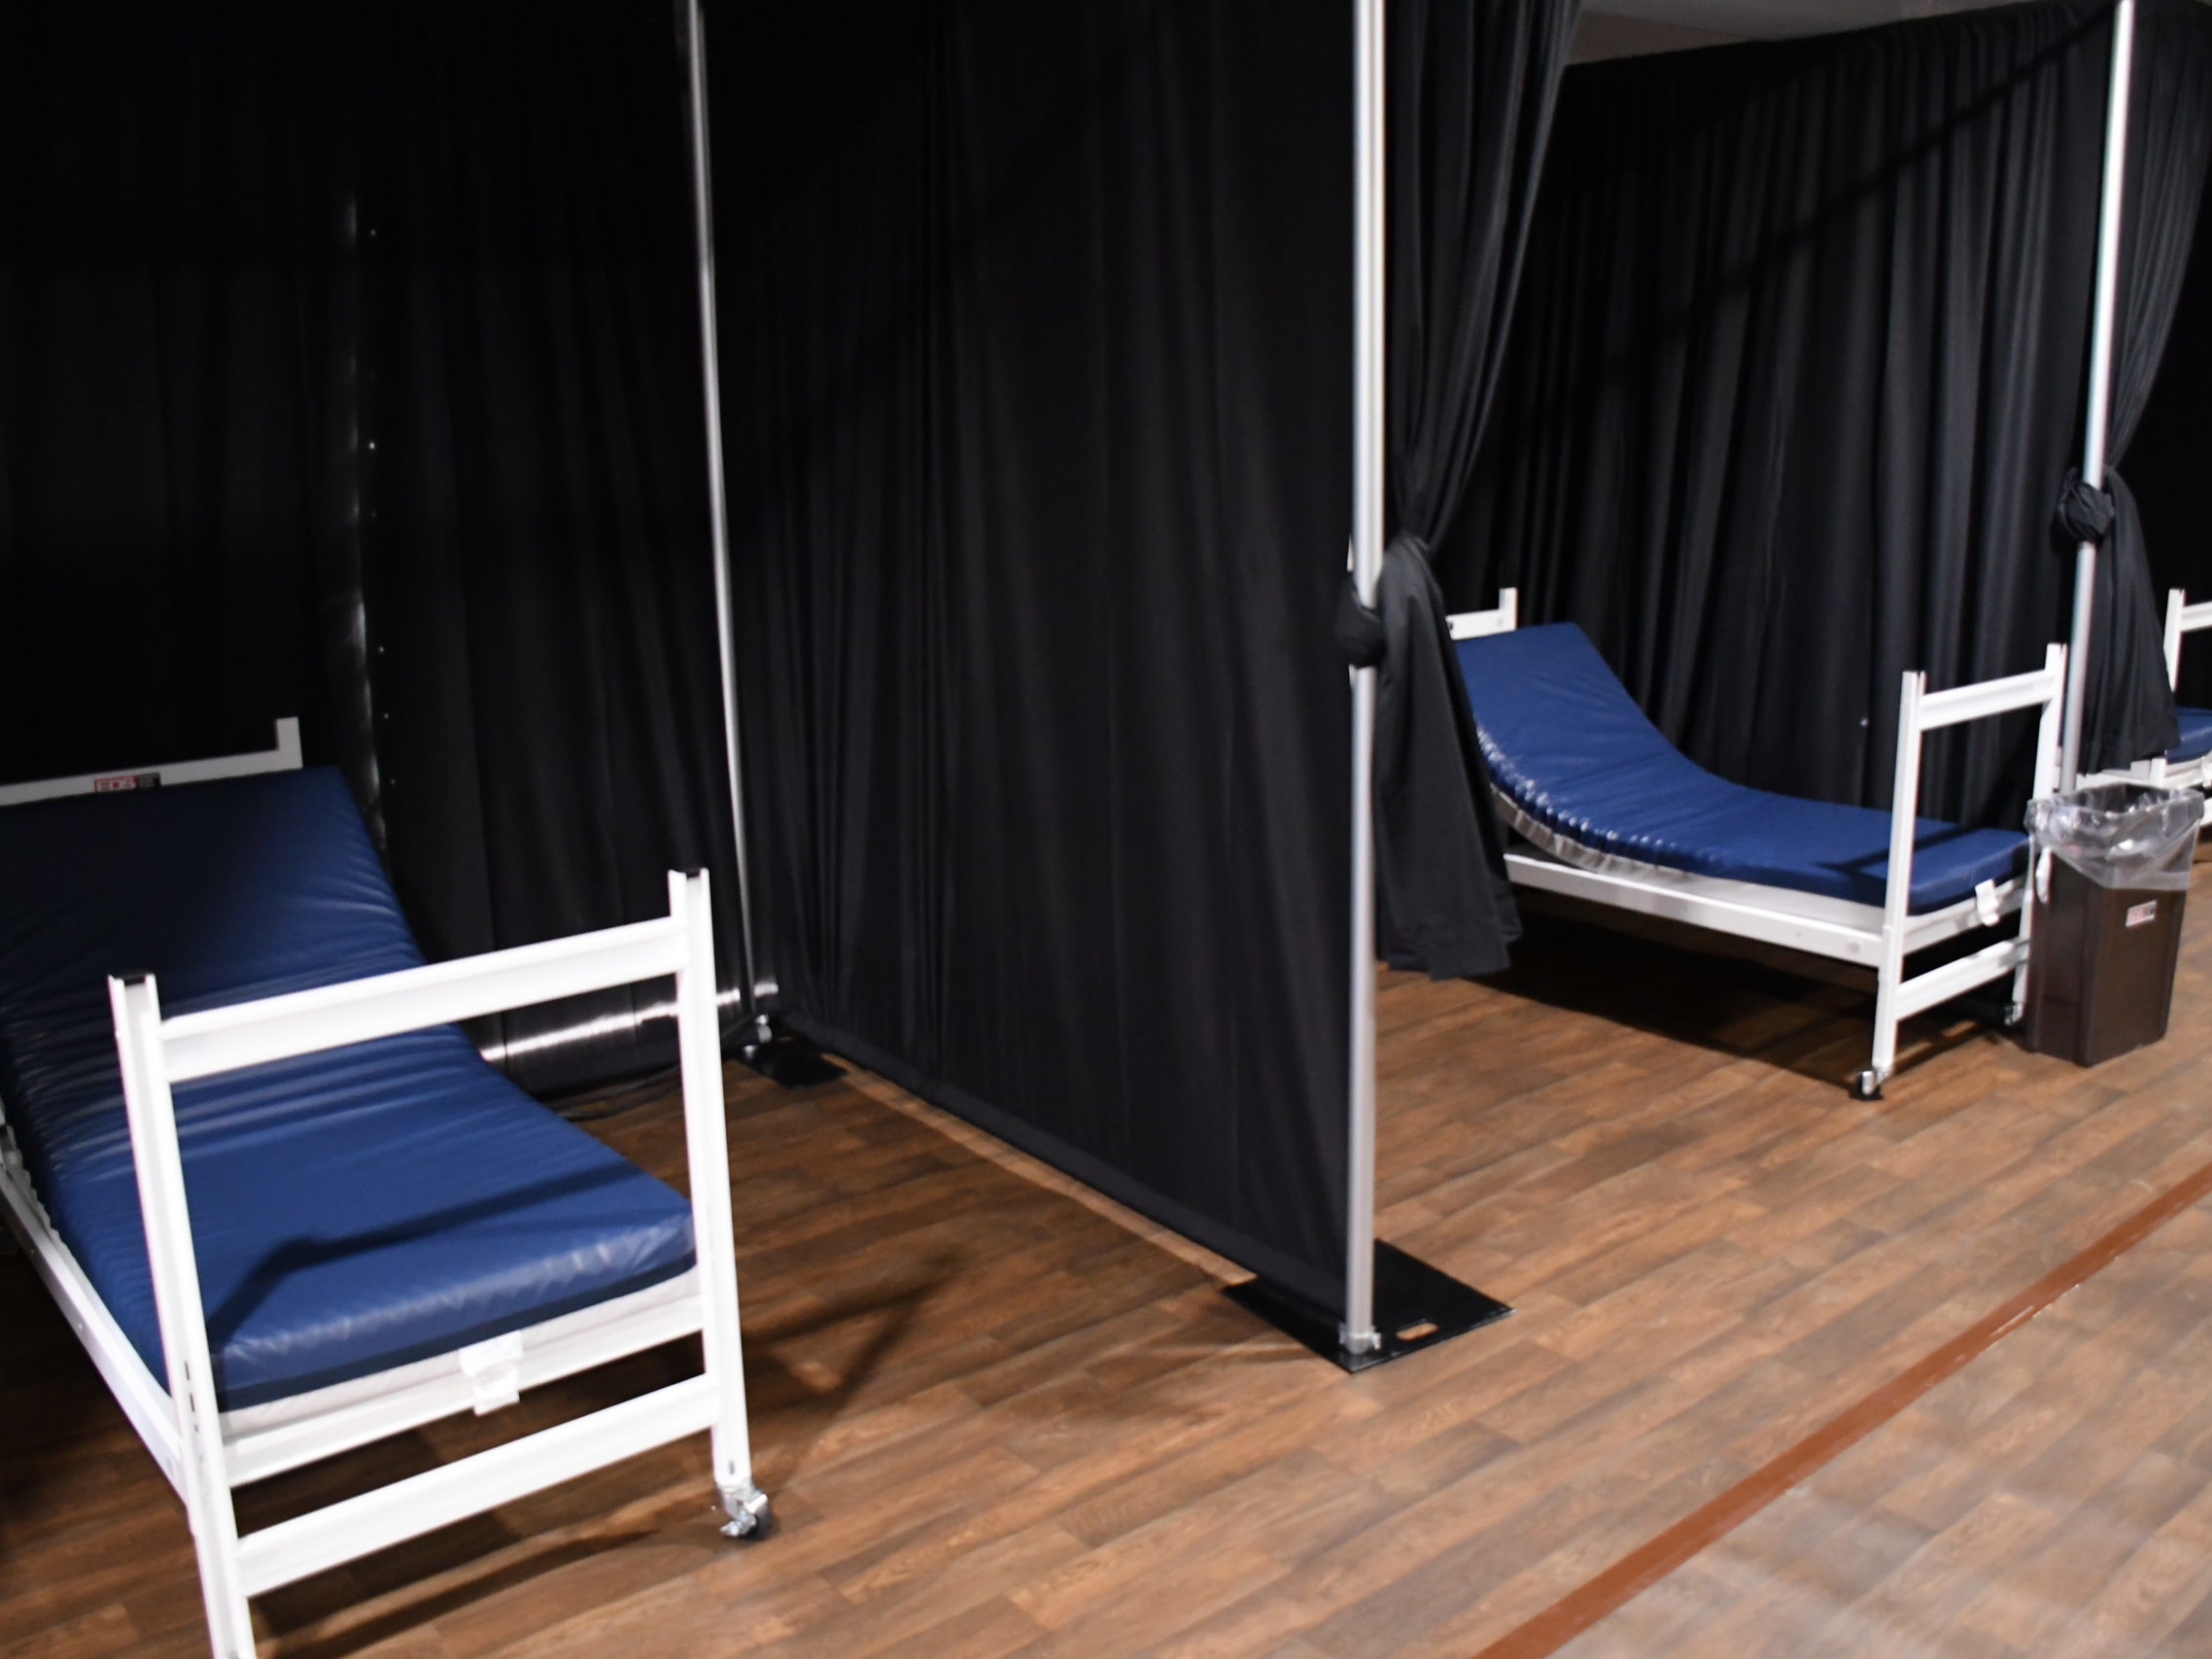 Beds set up at alternative care site set up at UT Health San Antonio-Regional Campus Laredo